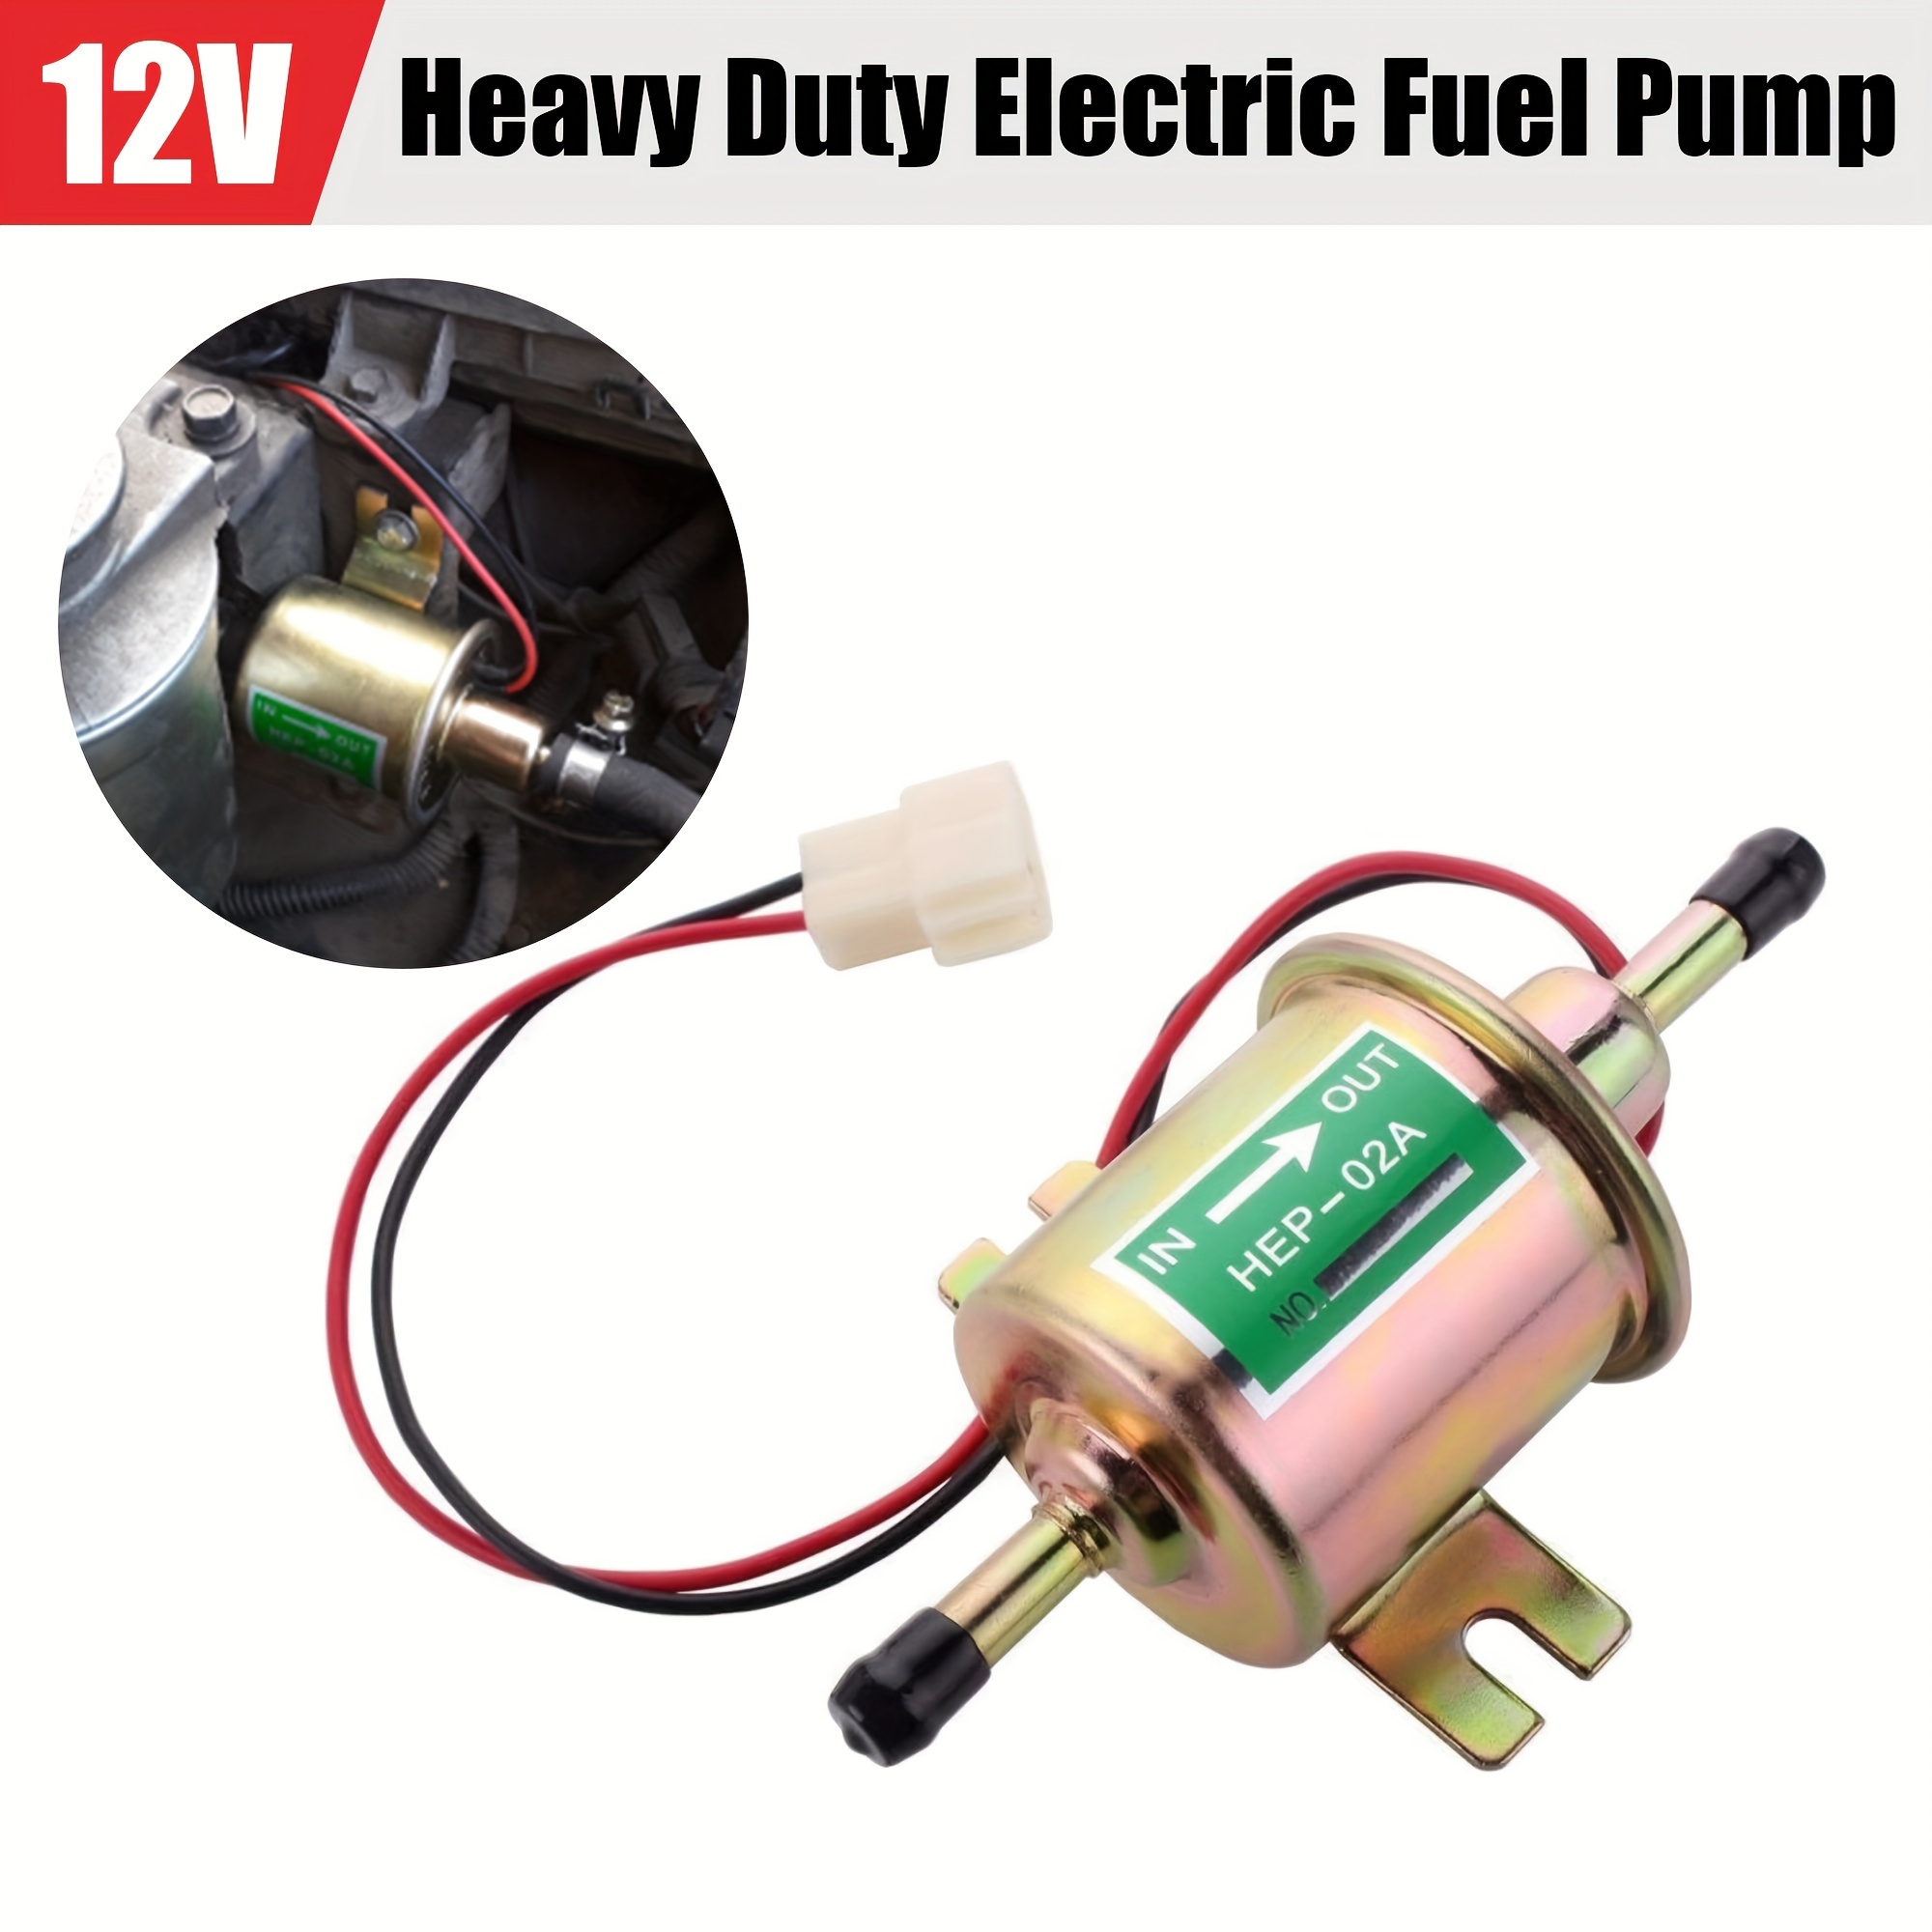 Electric Fuel Pump, 12 Volt Inline Fuel Pump, 12V Heavy Duty Electric Fuel  Pump, Universal Low Pressure Gas Diesel Fuel Pump 2.5-4Psi HEP-02A